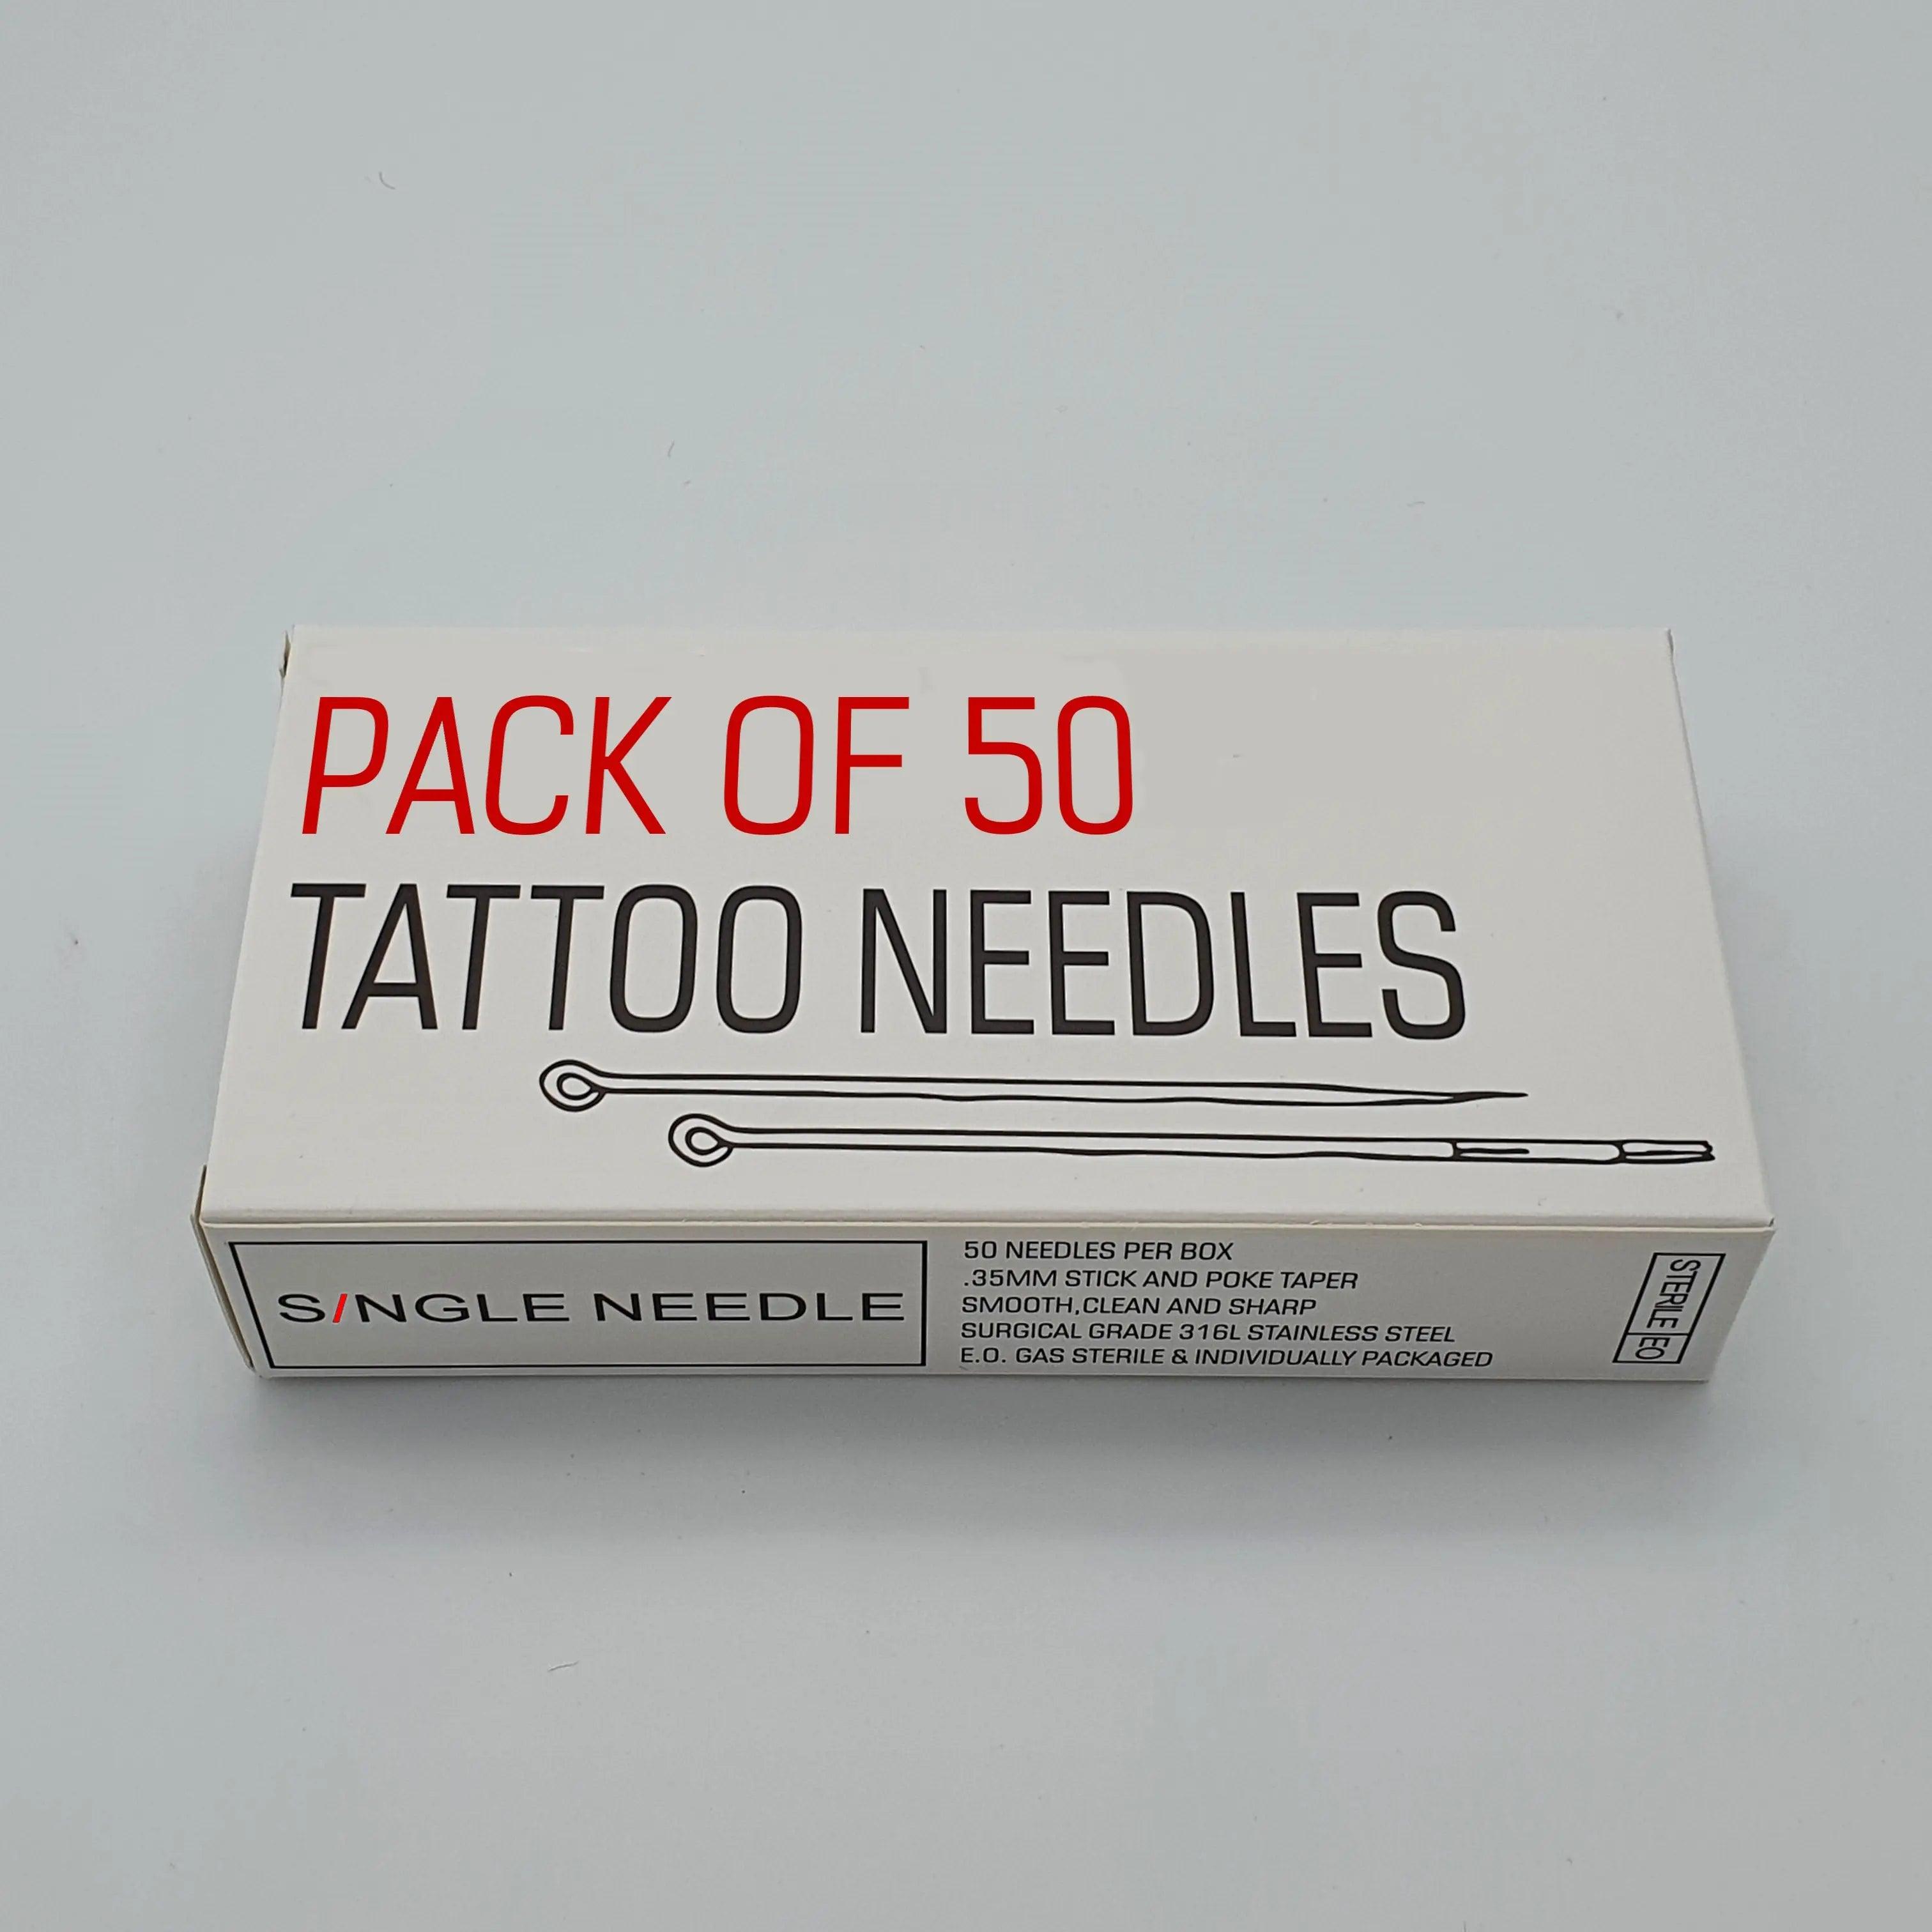 Stick & Poke Tattoo Needles - Round Magnum - RM - SINGLE NEEDLE